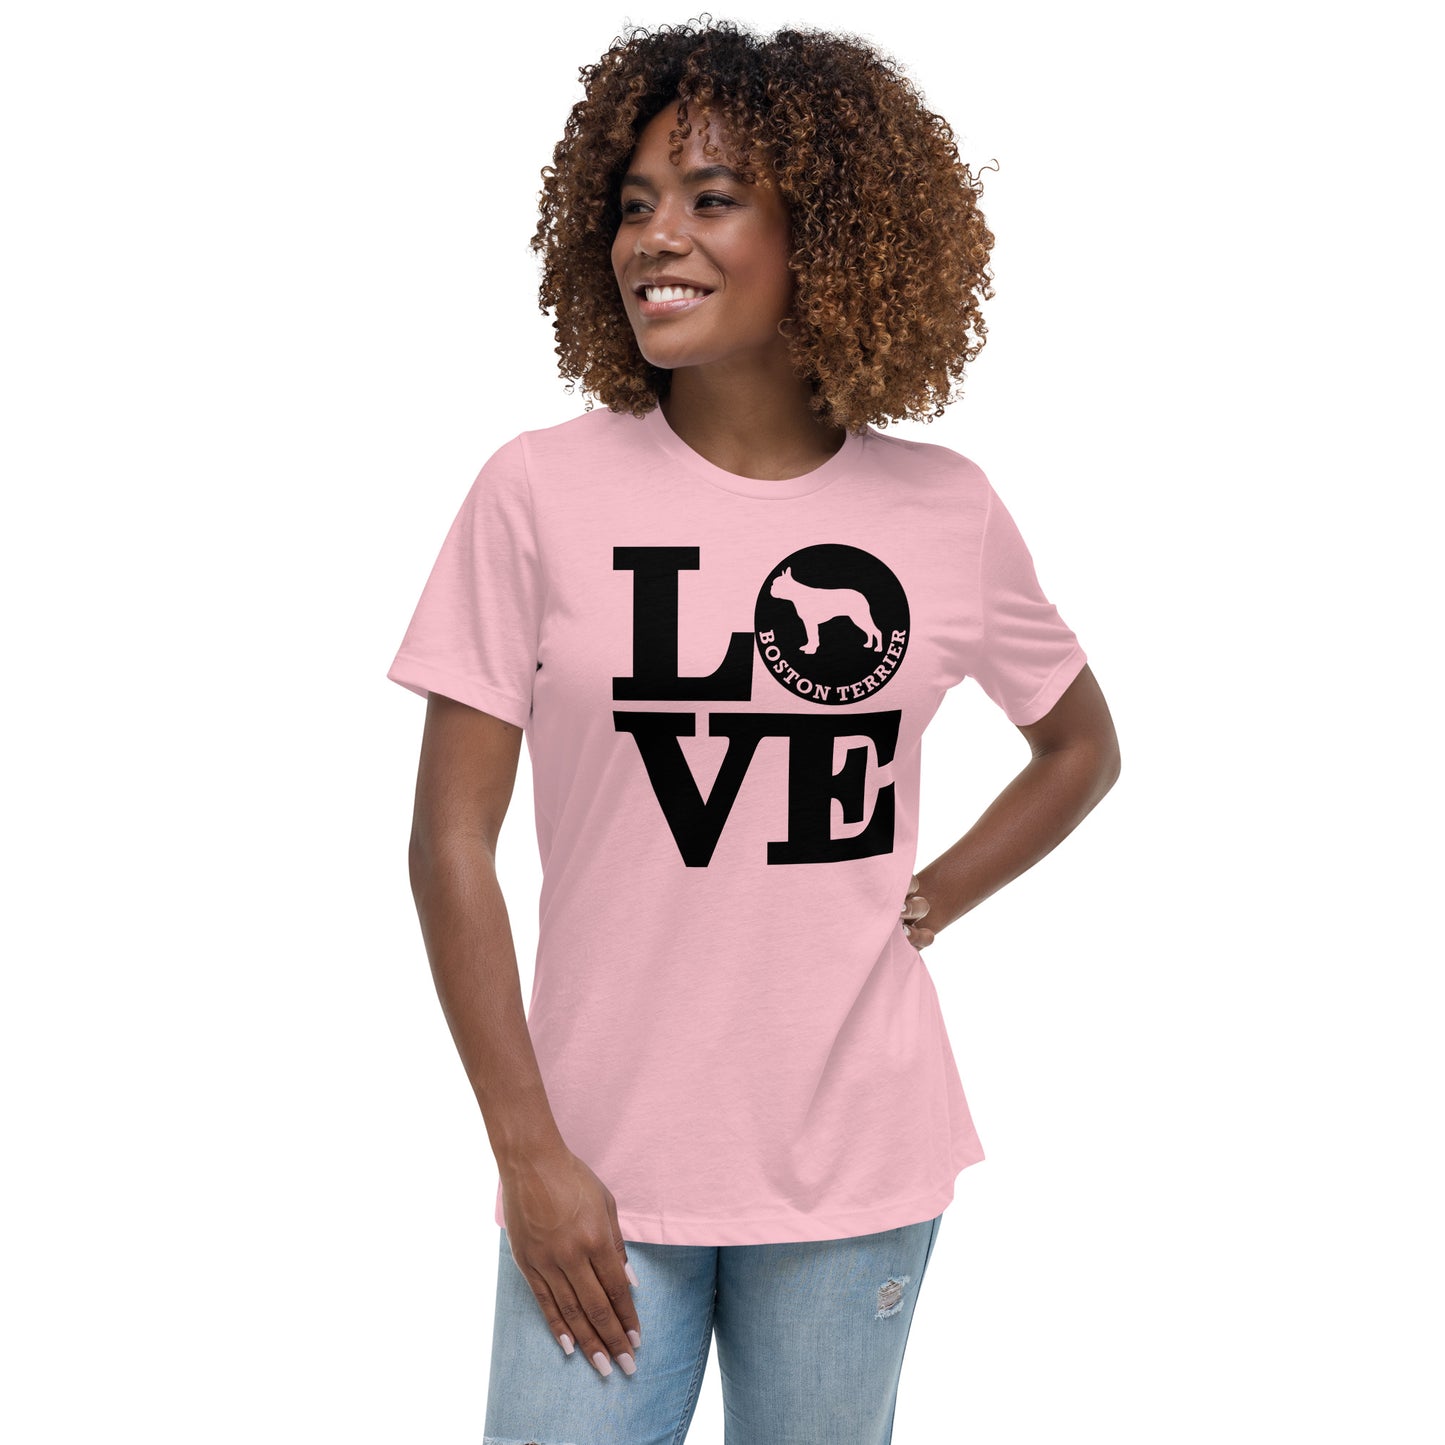 Boston Terrier Love women’s pink t-shirt by Dog Artistry.